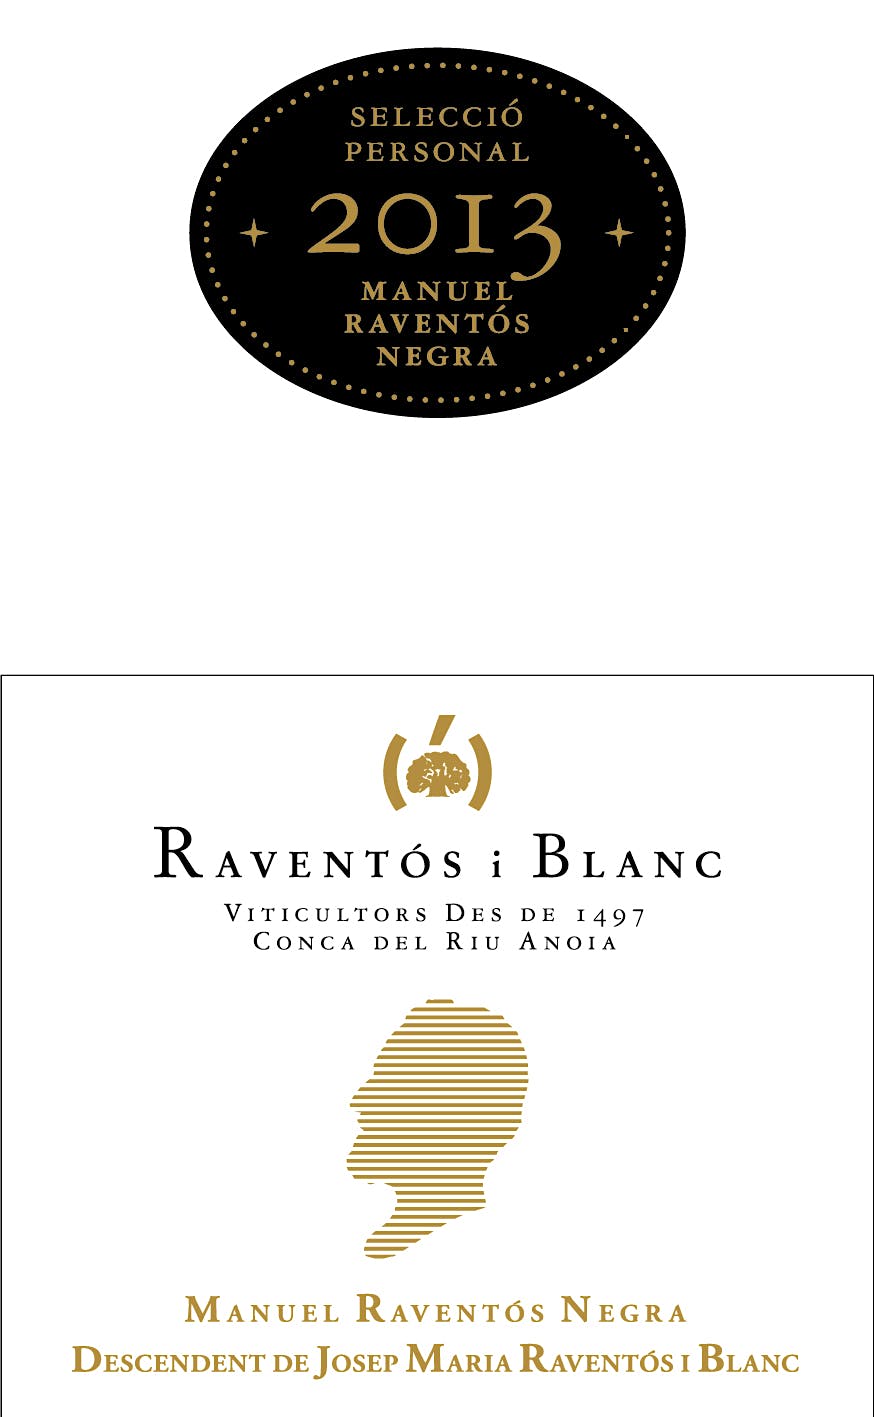 Label for Josep Maria Raventós i Blanc